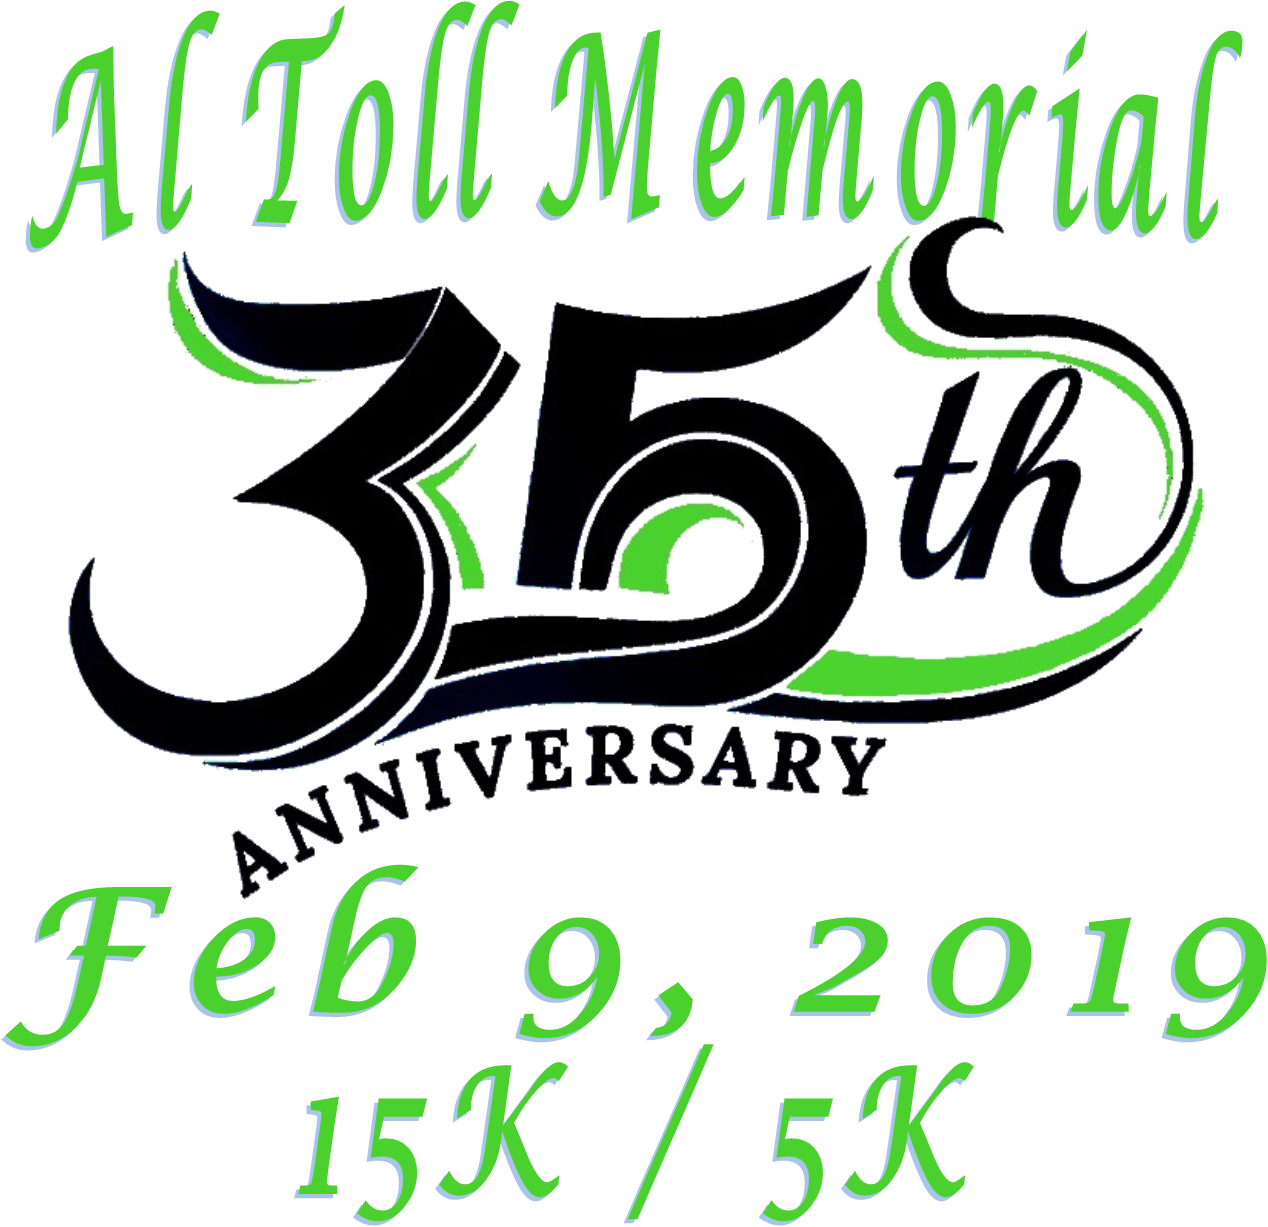 Al Toll Memorial 5K, 15K